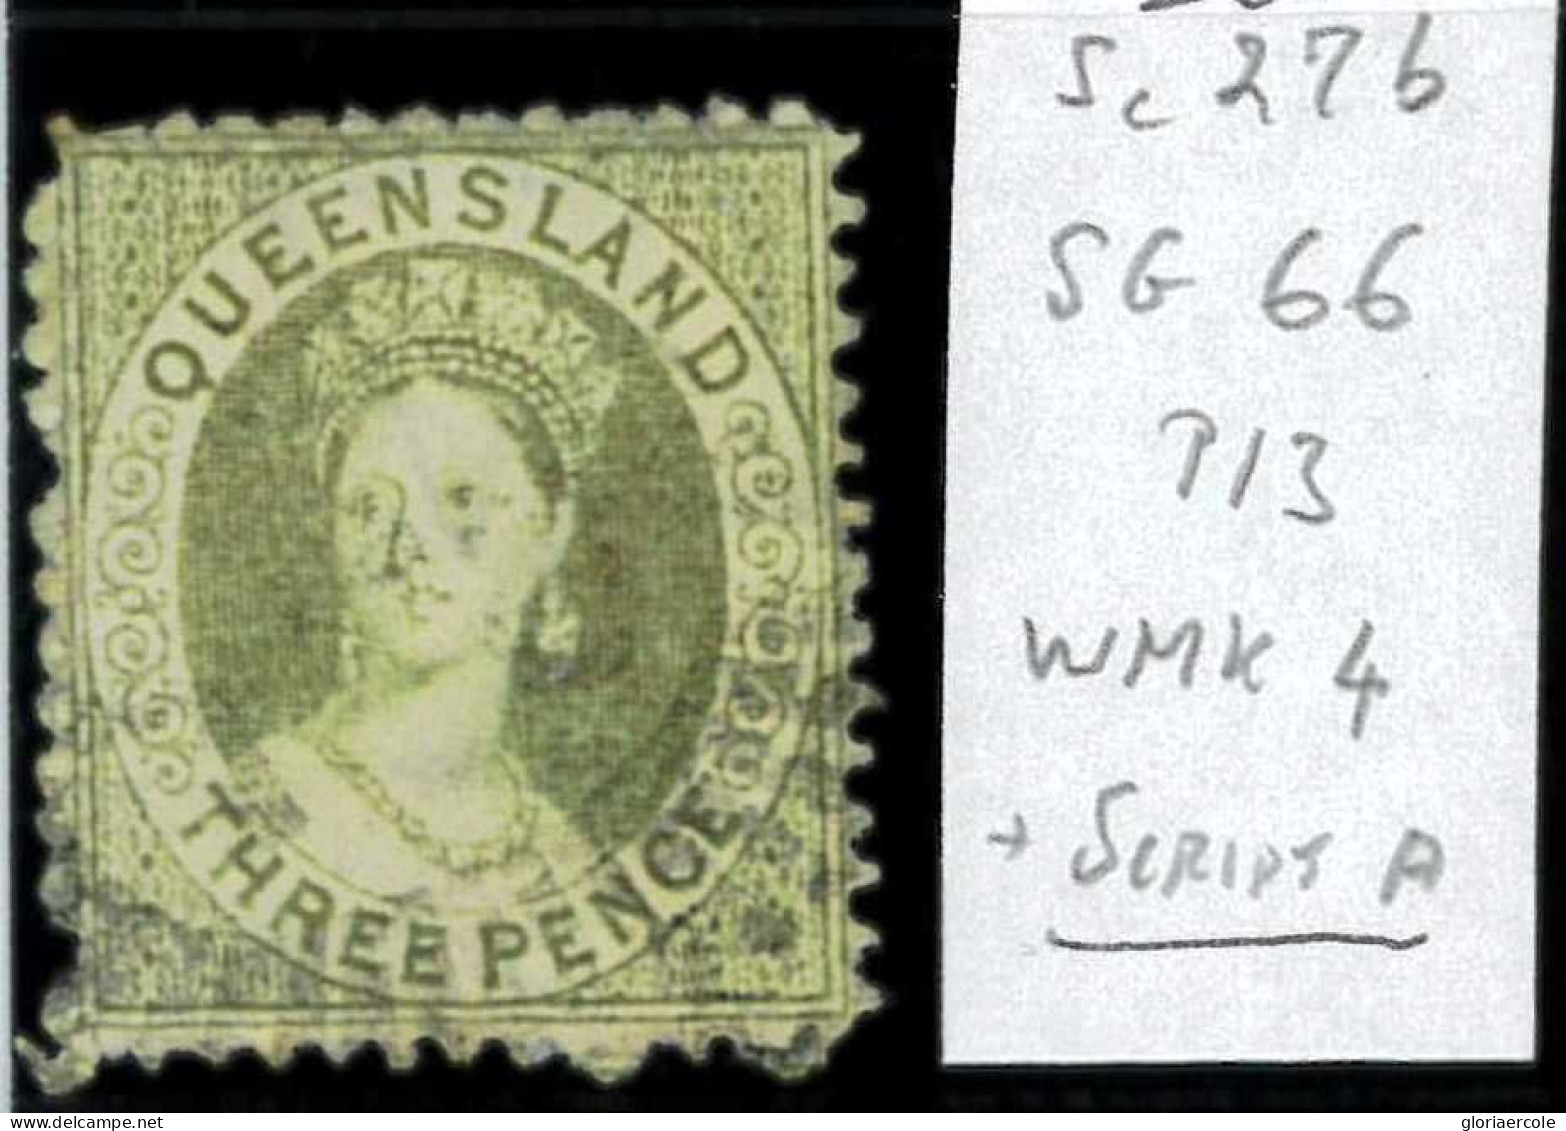 Aa5619i - Australia QUEENSLAND - STAMP - SG # 66  Watermark 4 + SCRIPT P  - USED - Mint Stamps